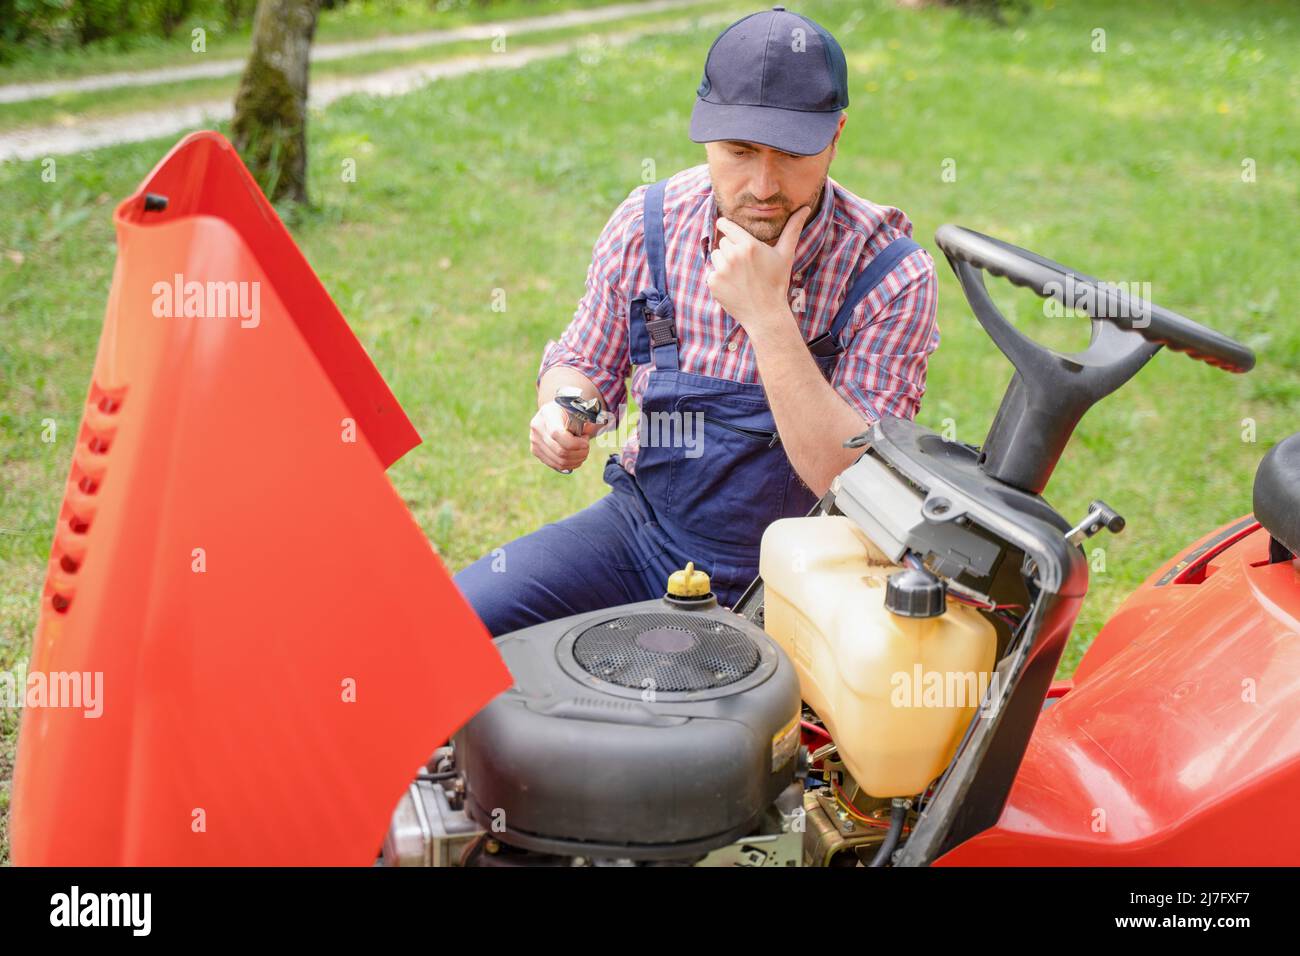 One man repairing broken lawn mower engine in the garden Stock Photo ...